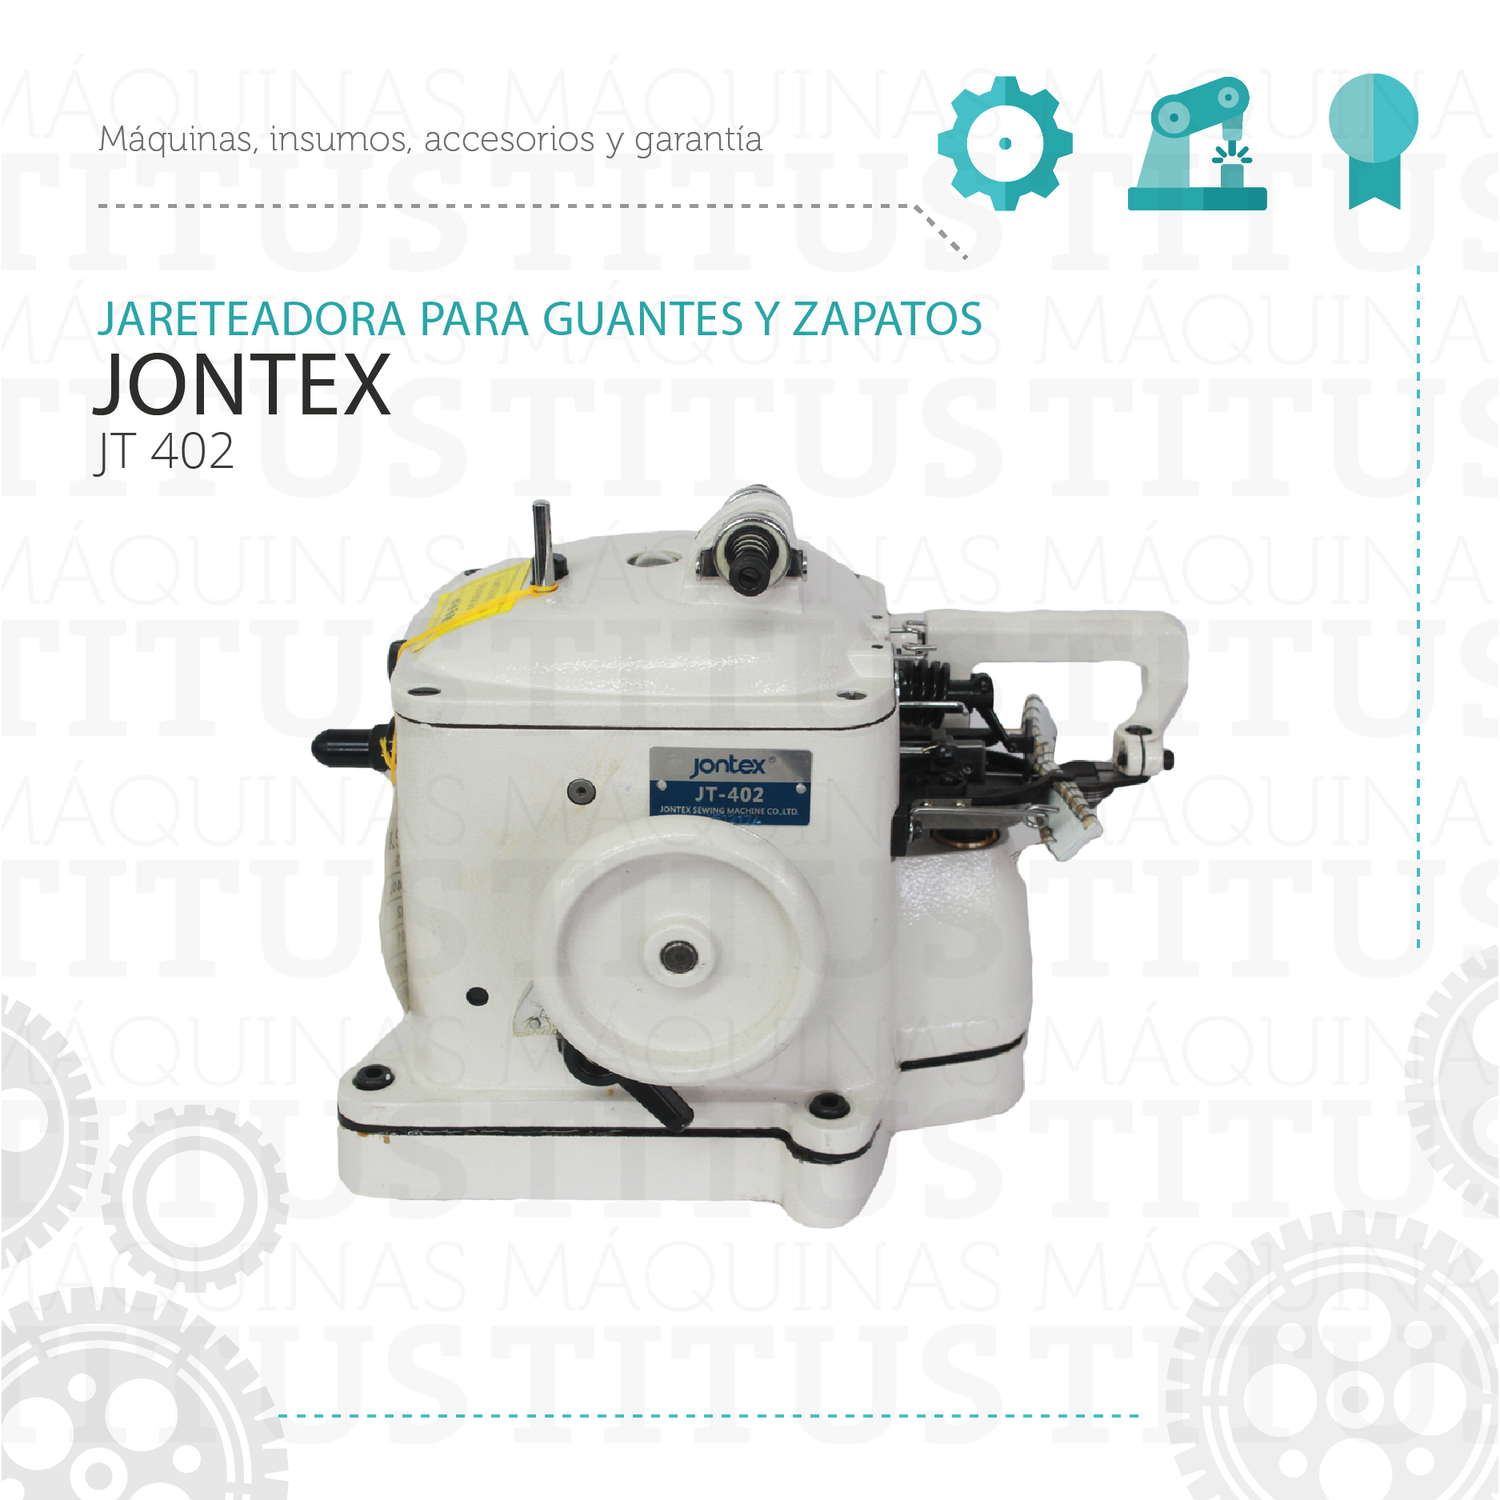 Jareteadora Jontex JT 402 Para Guantes Zapatos - Commercio